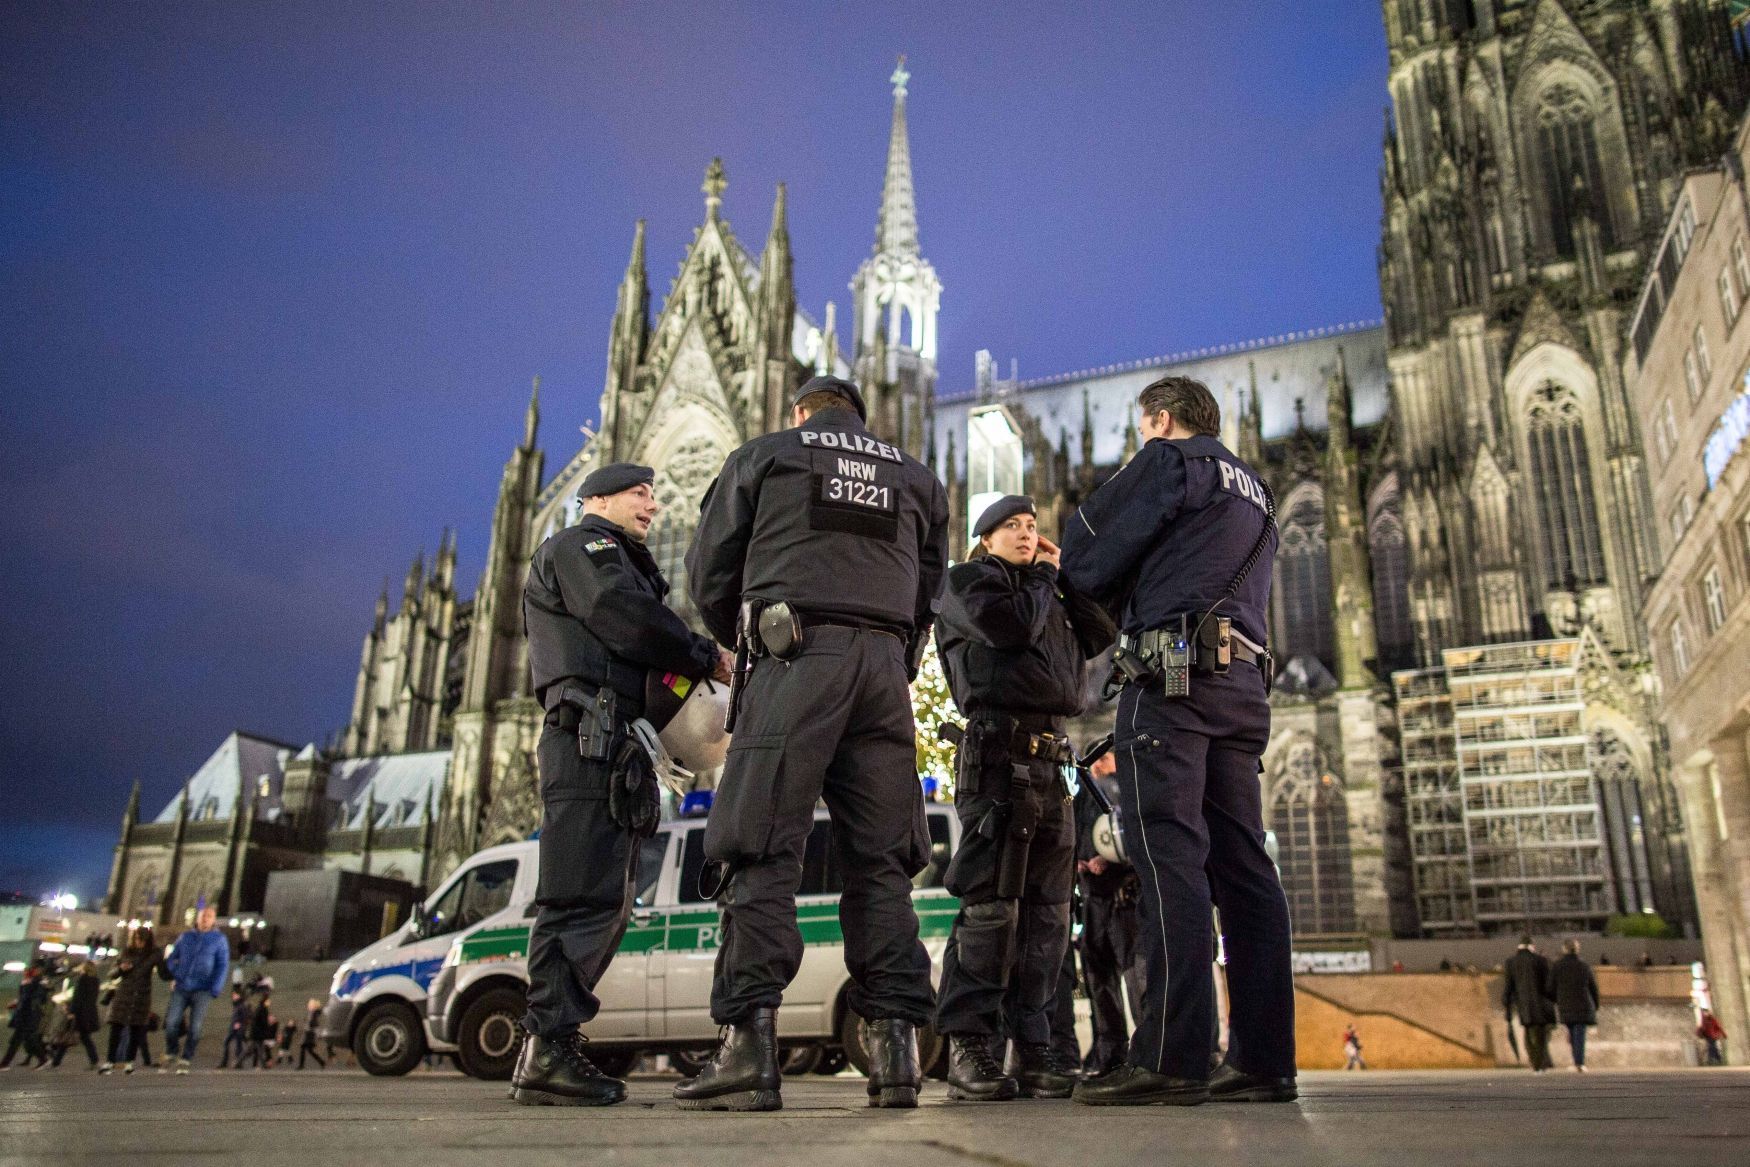 Policie patroluje u dómu v Kolíně nad Rýnem.